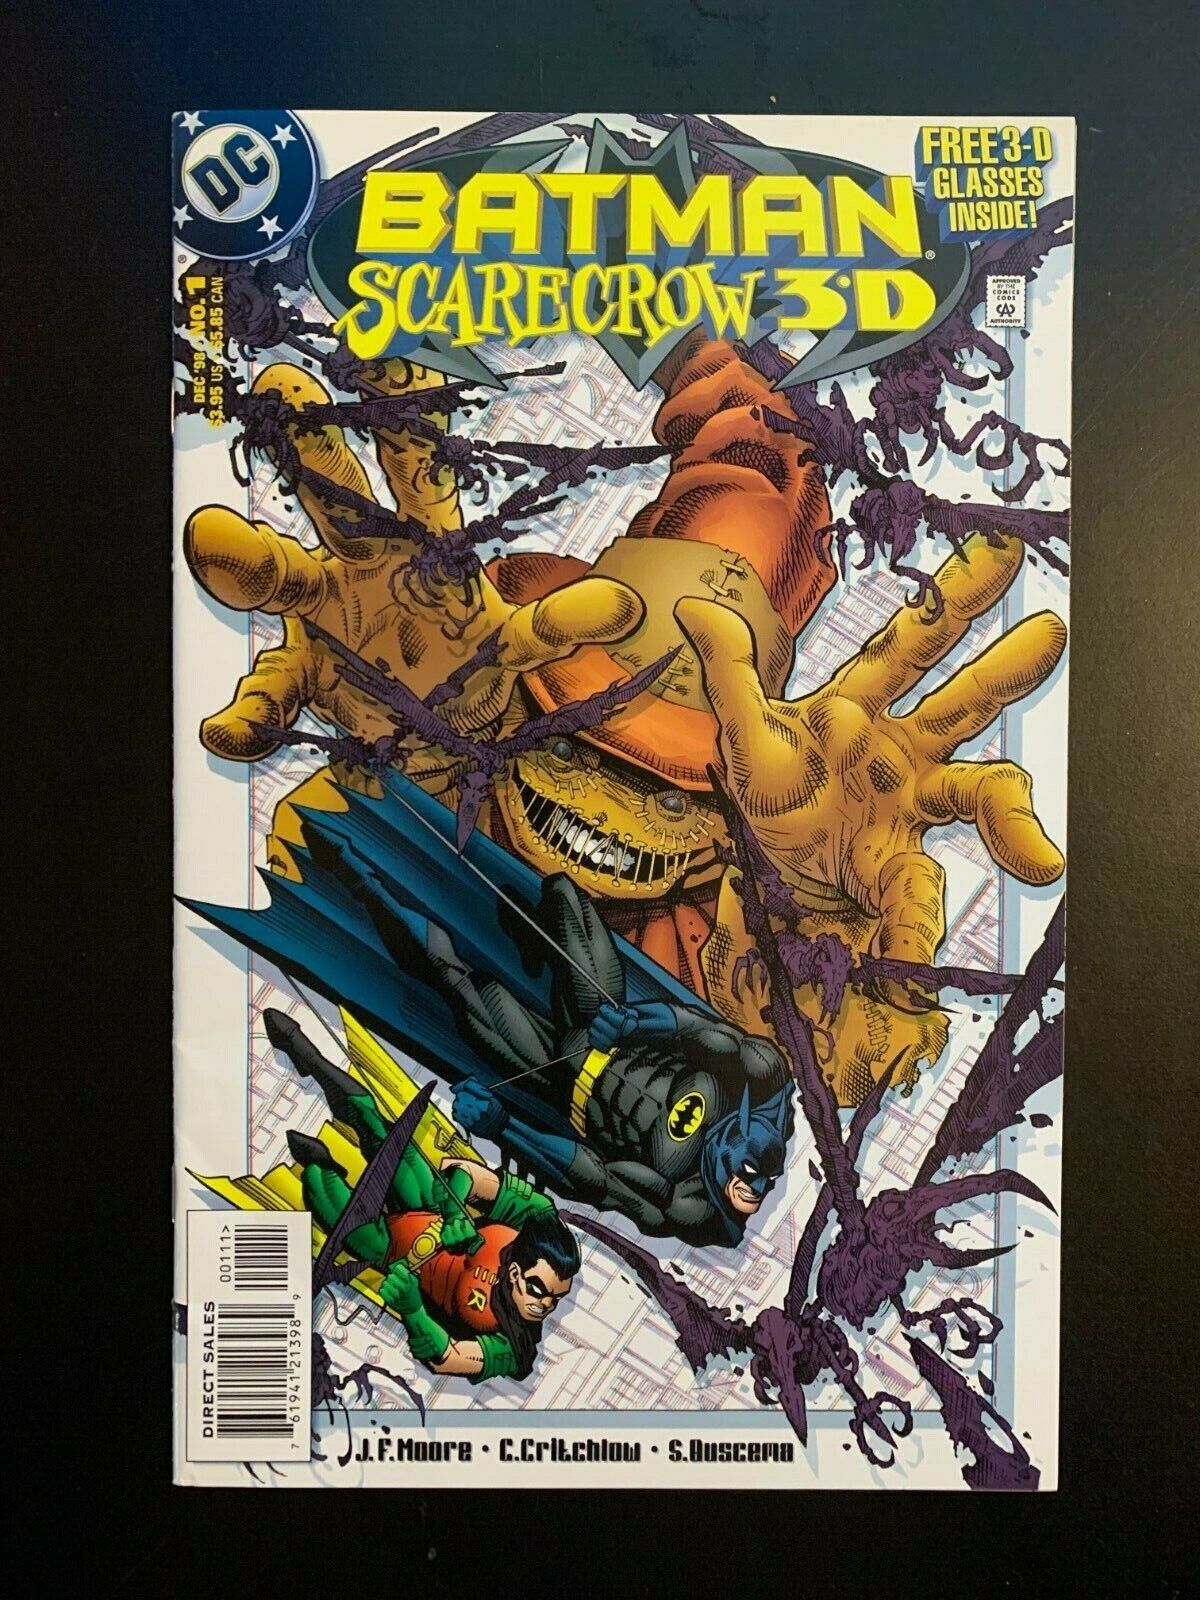 Batman / Scarecrow 3-D #1 - Dec 1998 - (2075)